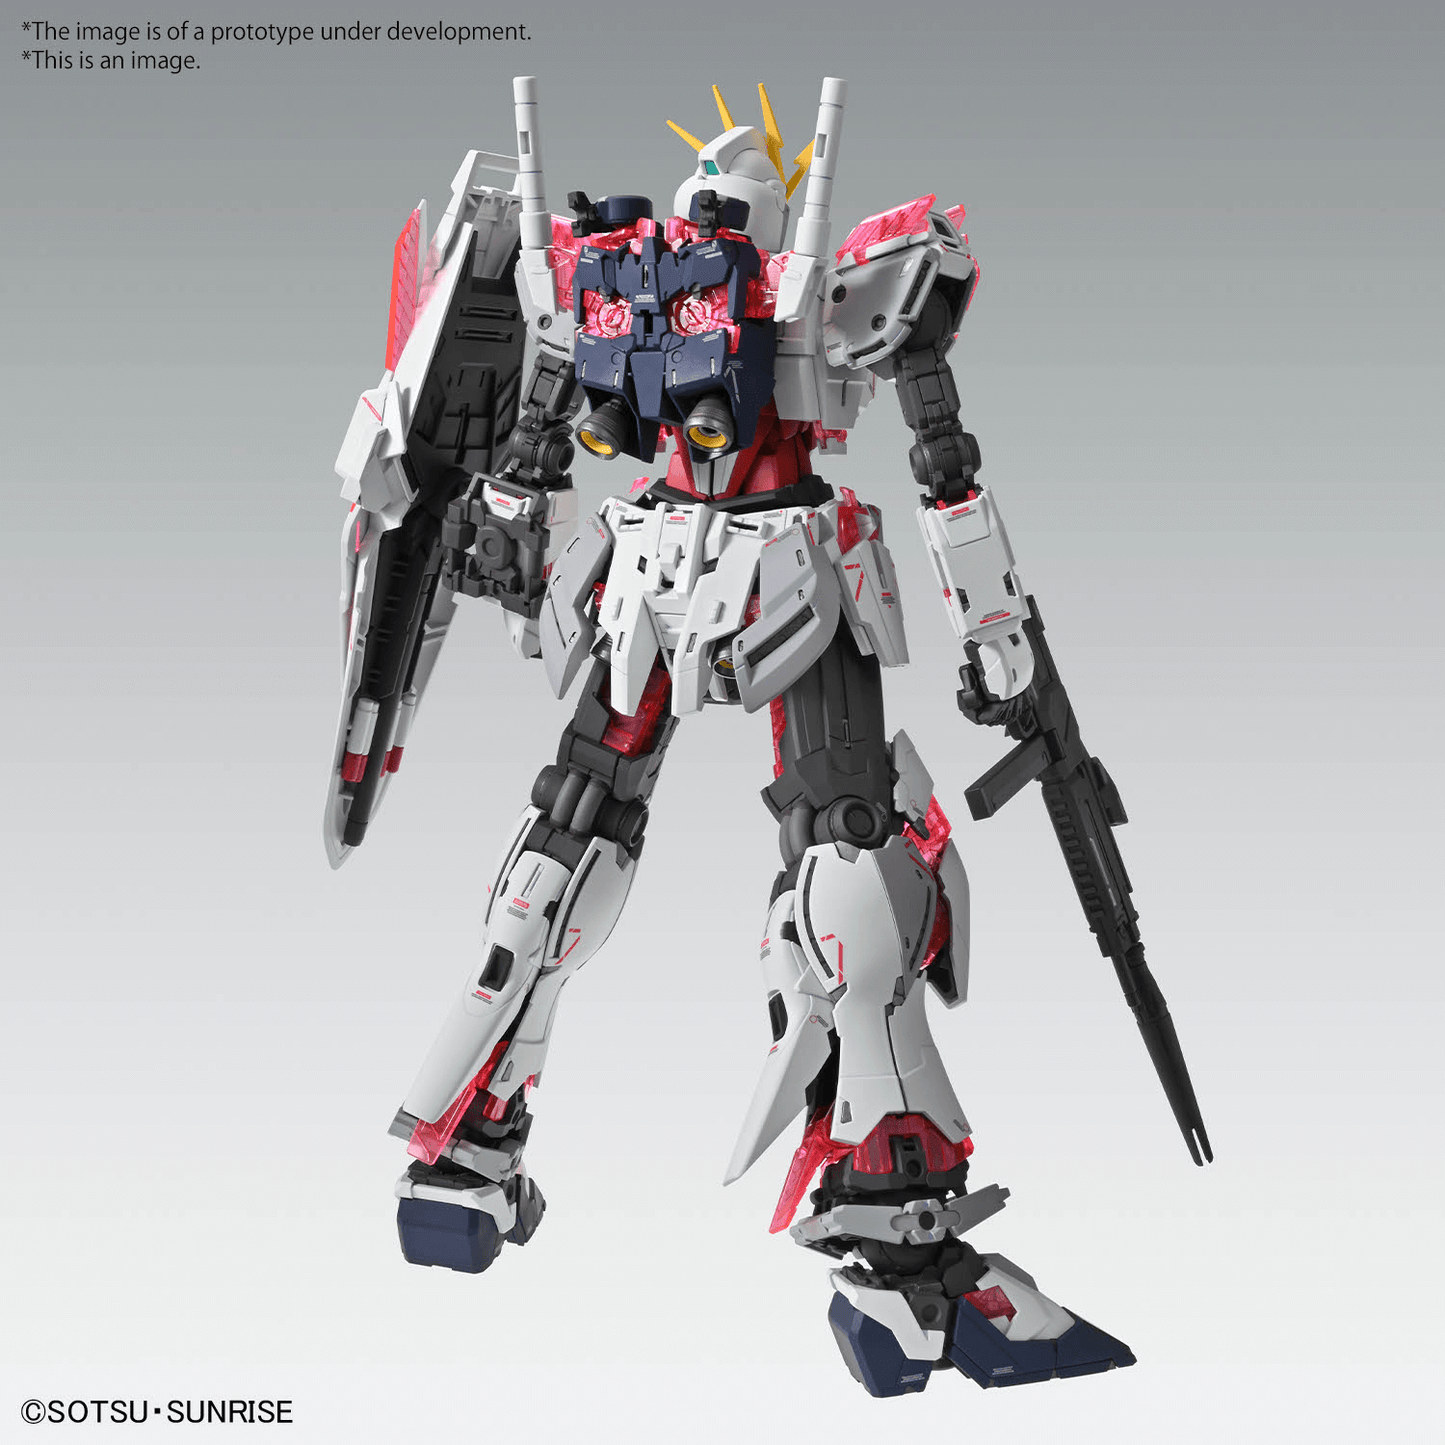 Gundam - 1/100 - Narrative Gundam C-Packs Ver.KA Model Kit [Pre-Order] (OCT 2024)